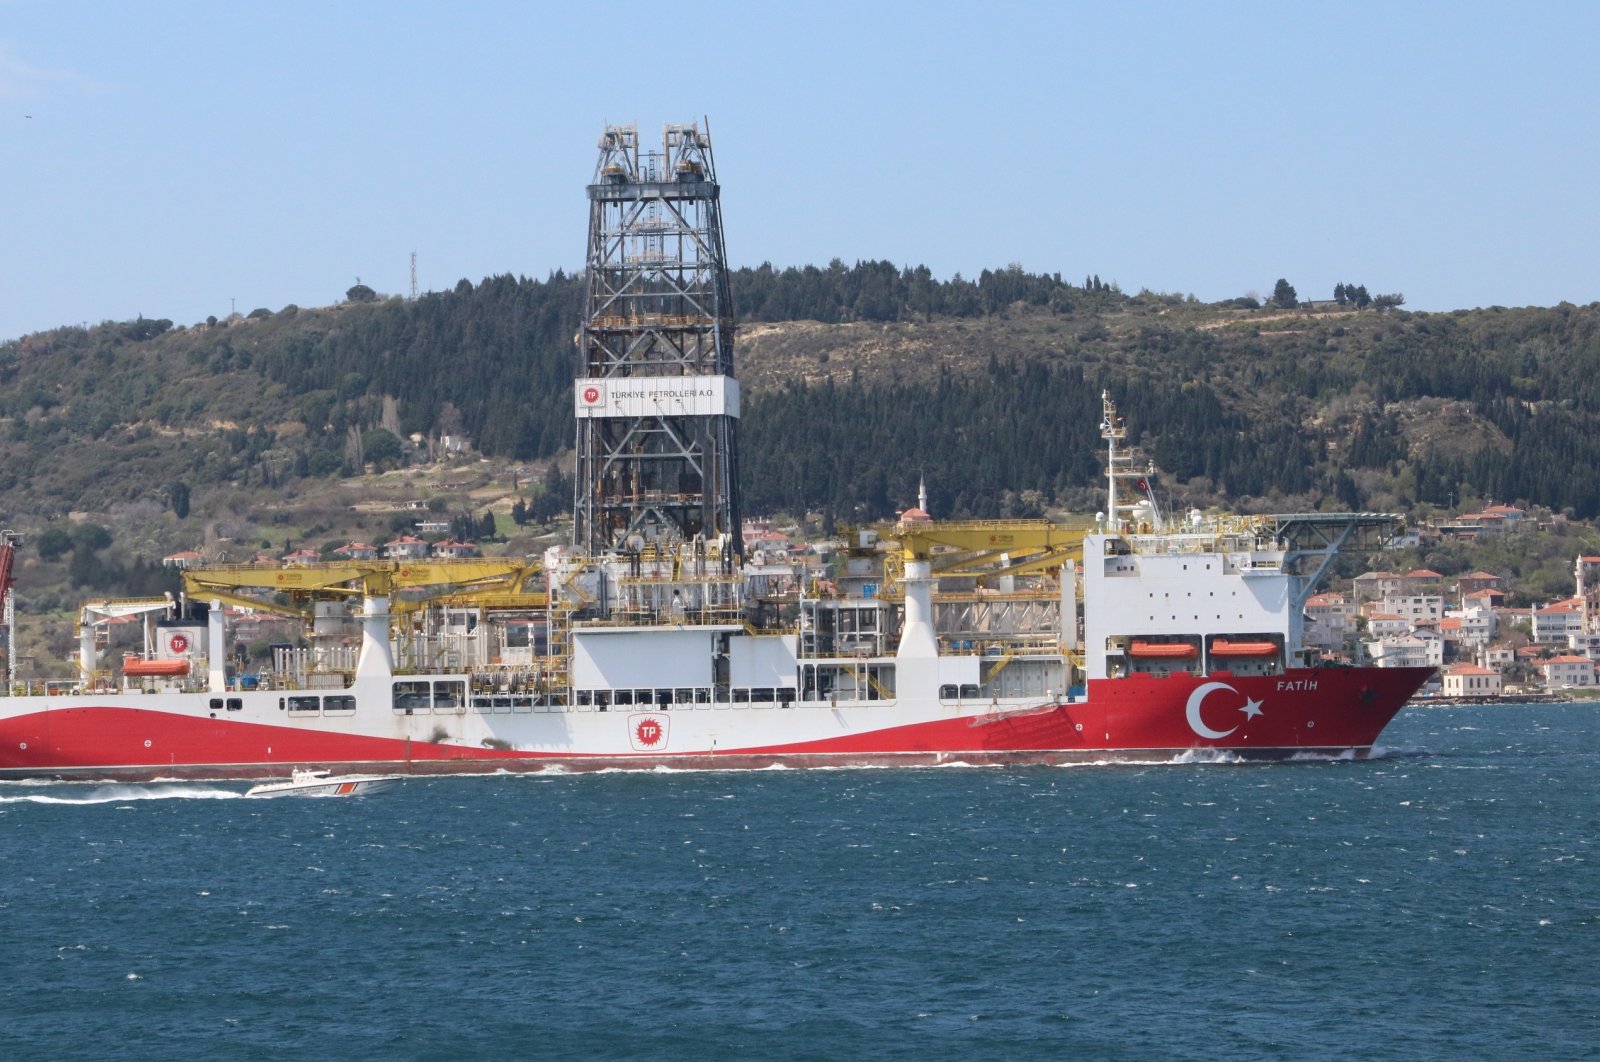 The Fatih drillship passes through the Dardanelles strait en route to the Black Sea, Çanakkale province, northwestern Turkey, April 8, 2020. (DHA Photo)